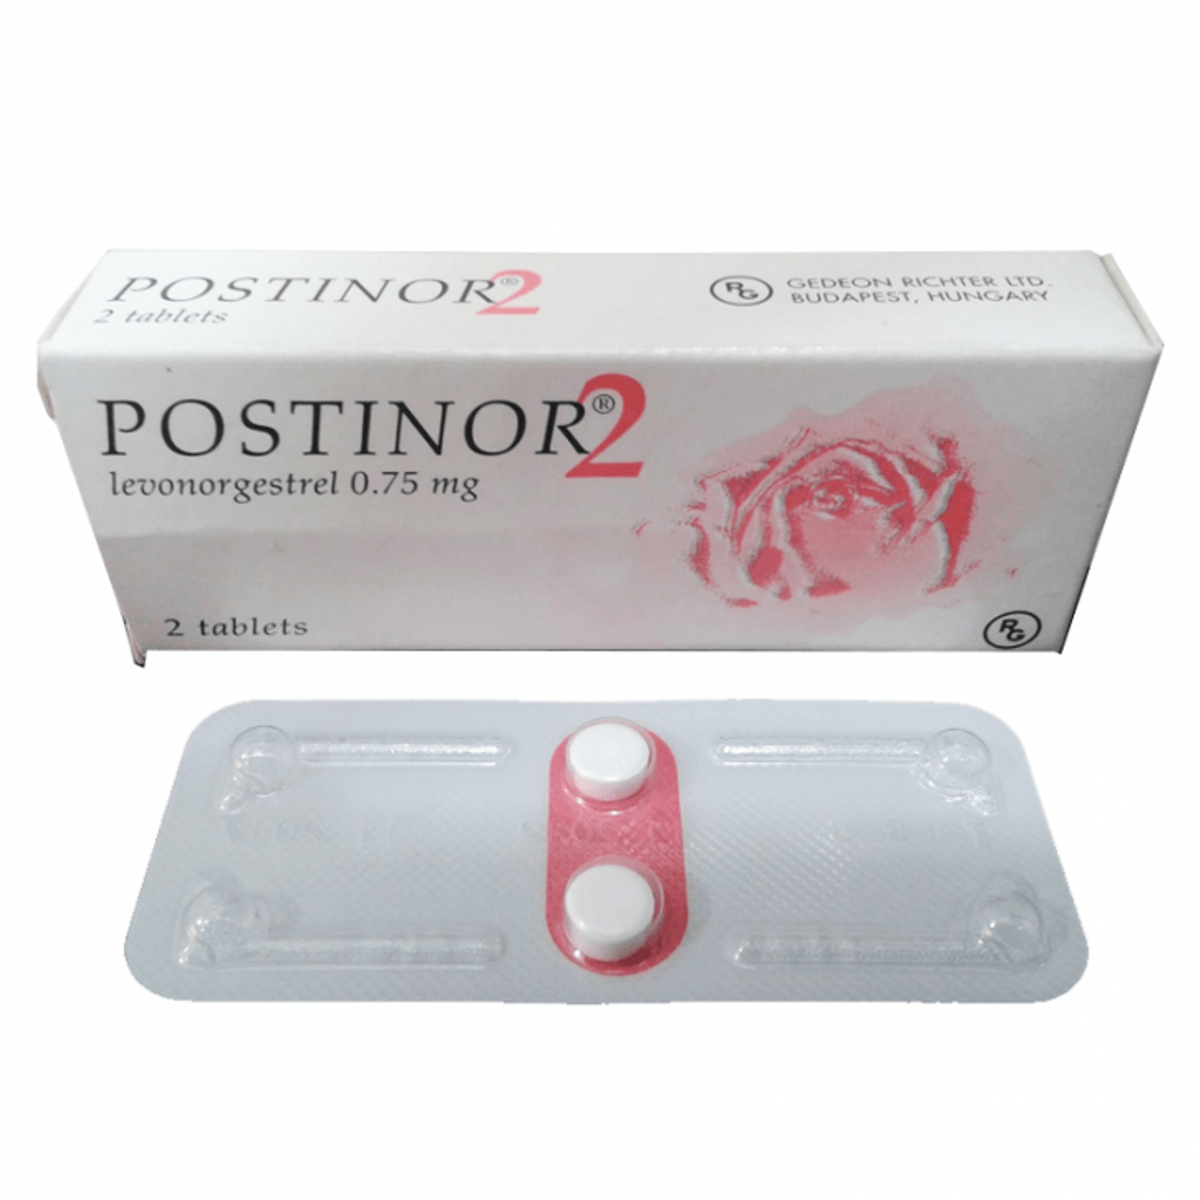 buy-postinor-2-24hr-service-online-pilldoctor-gh